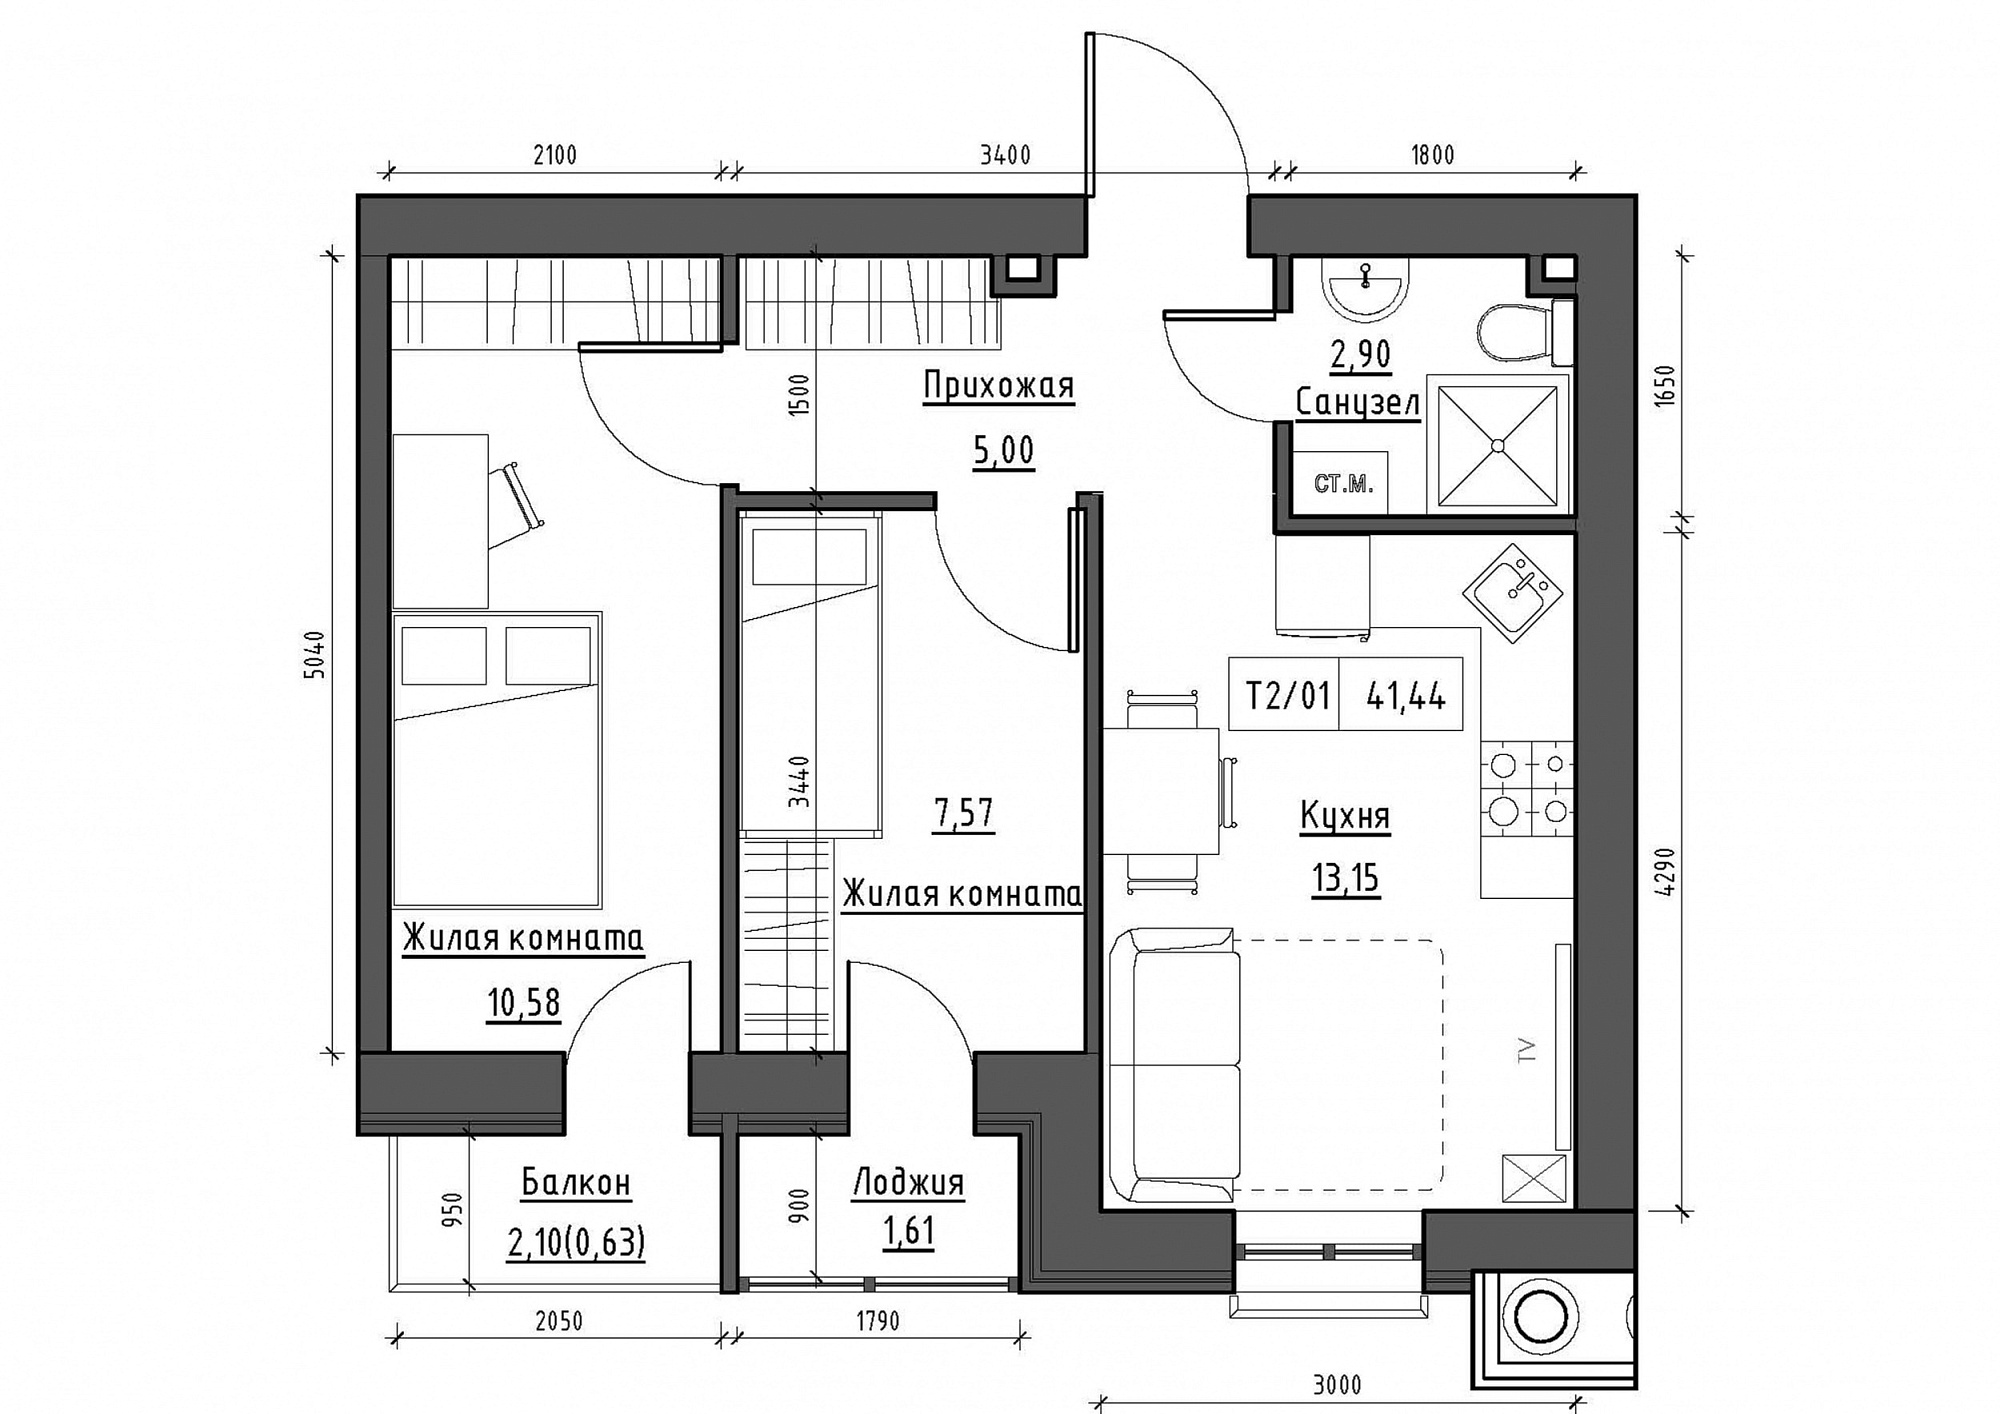 Planning 2-rm flats area 41.44m2, KS-011-02/0011.